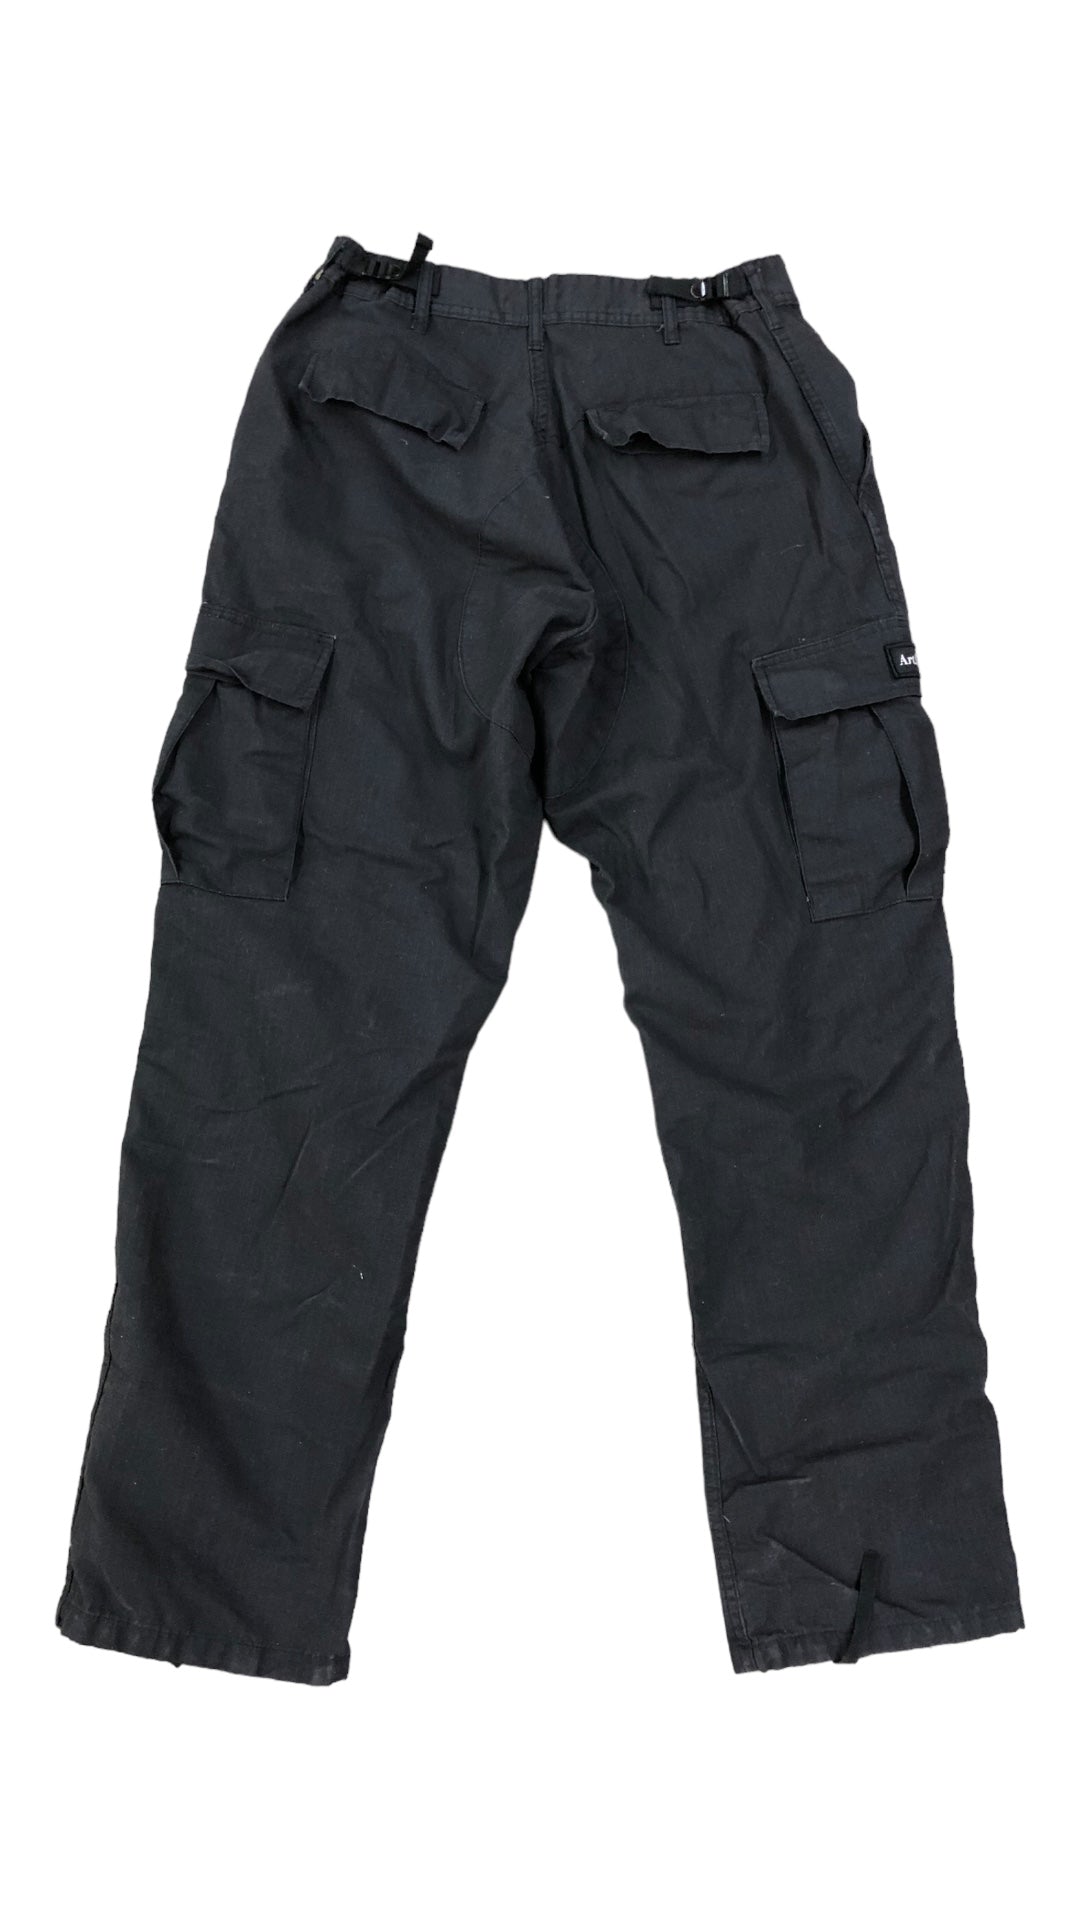 Preowned Artform Black Cargo Pants Sz 30x32